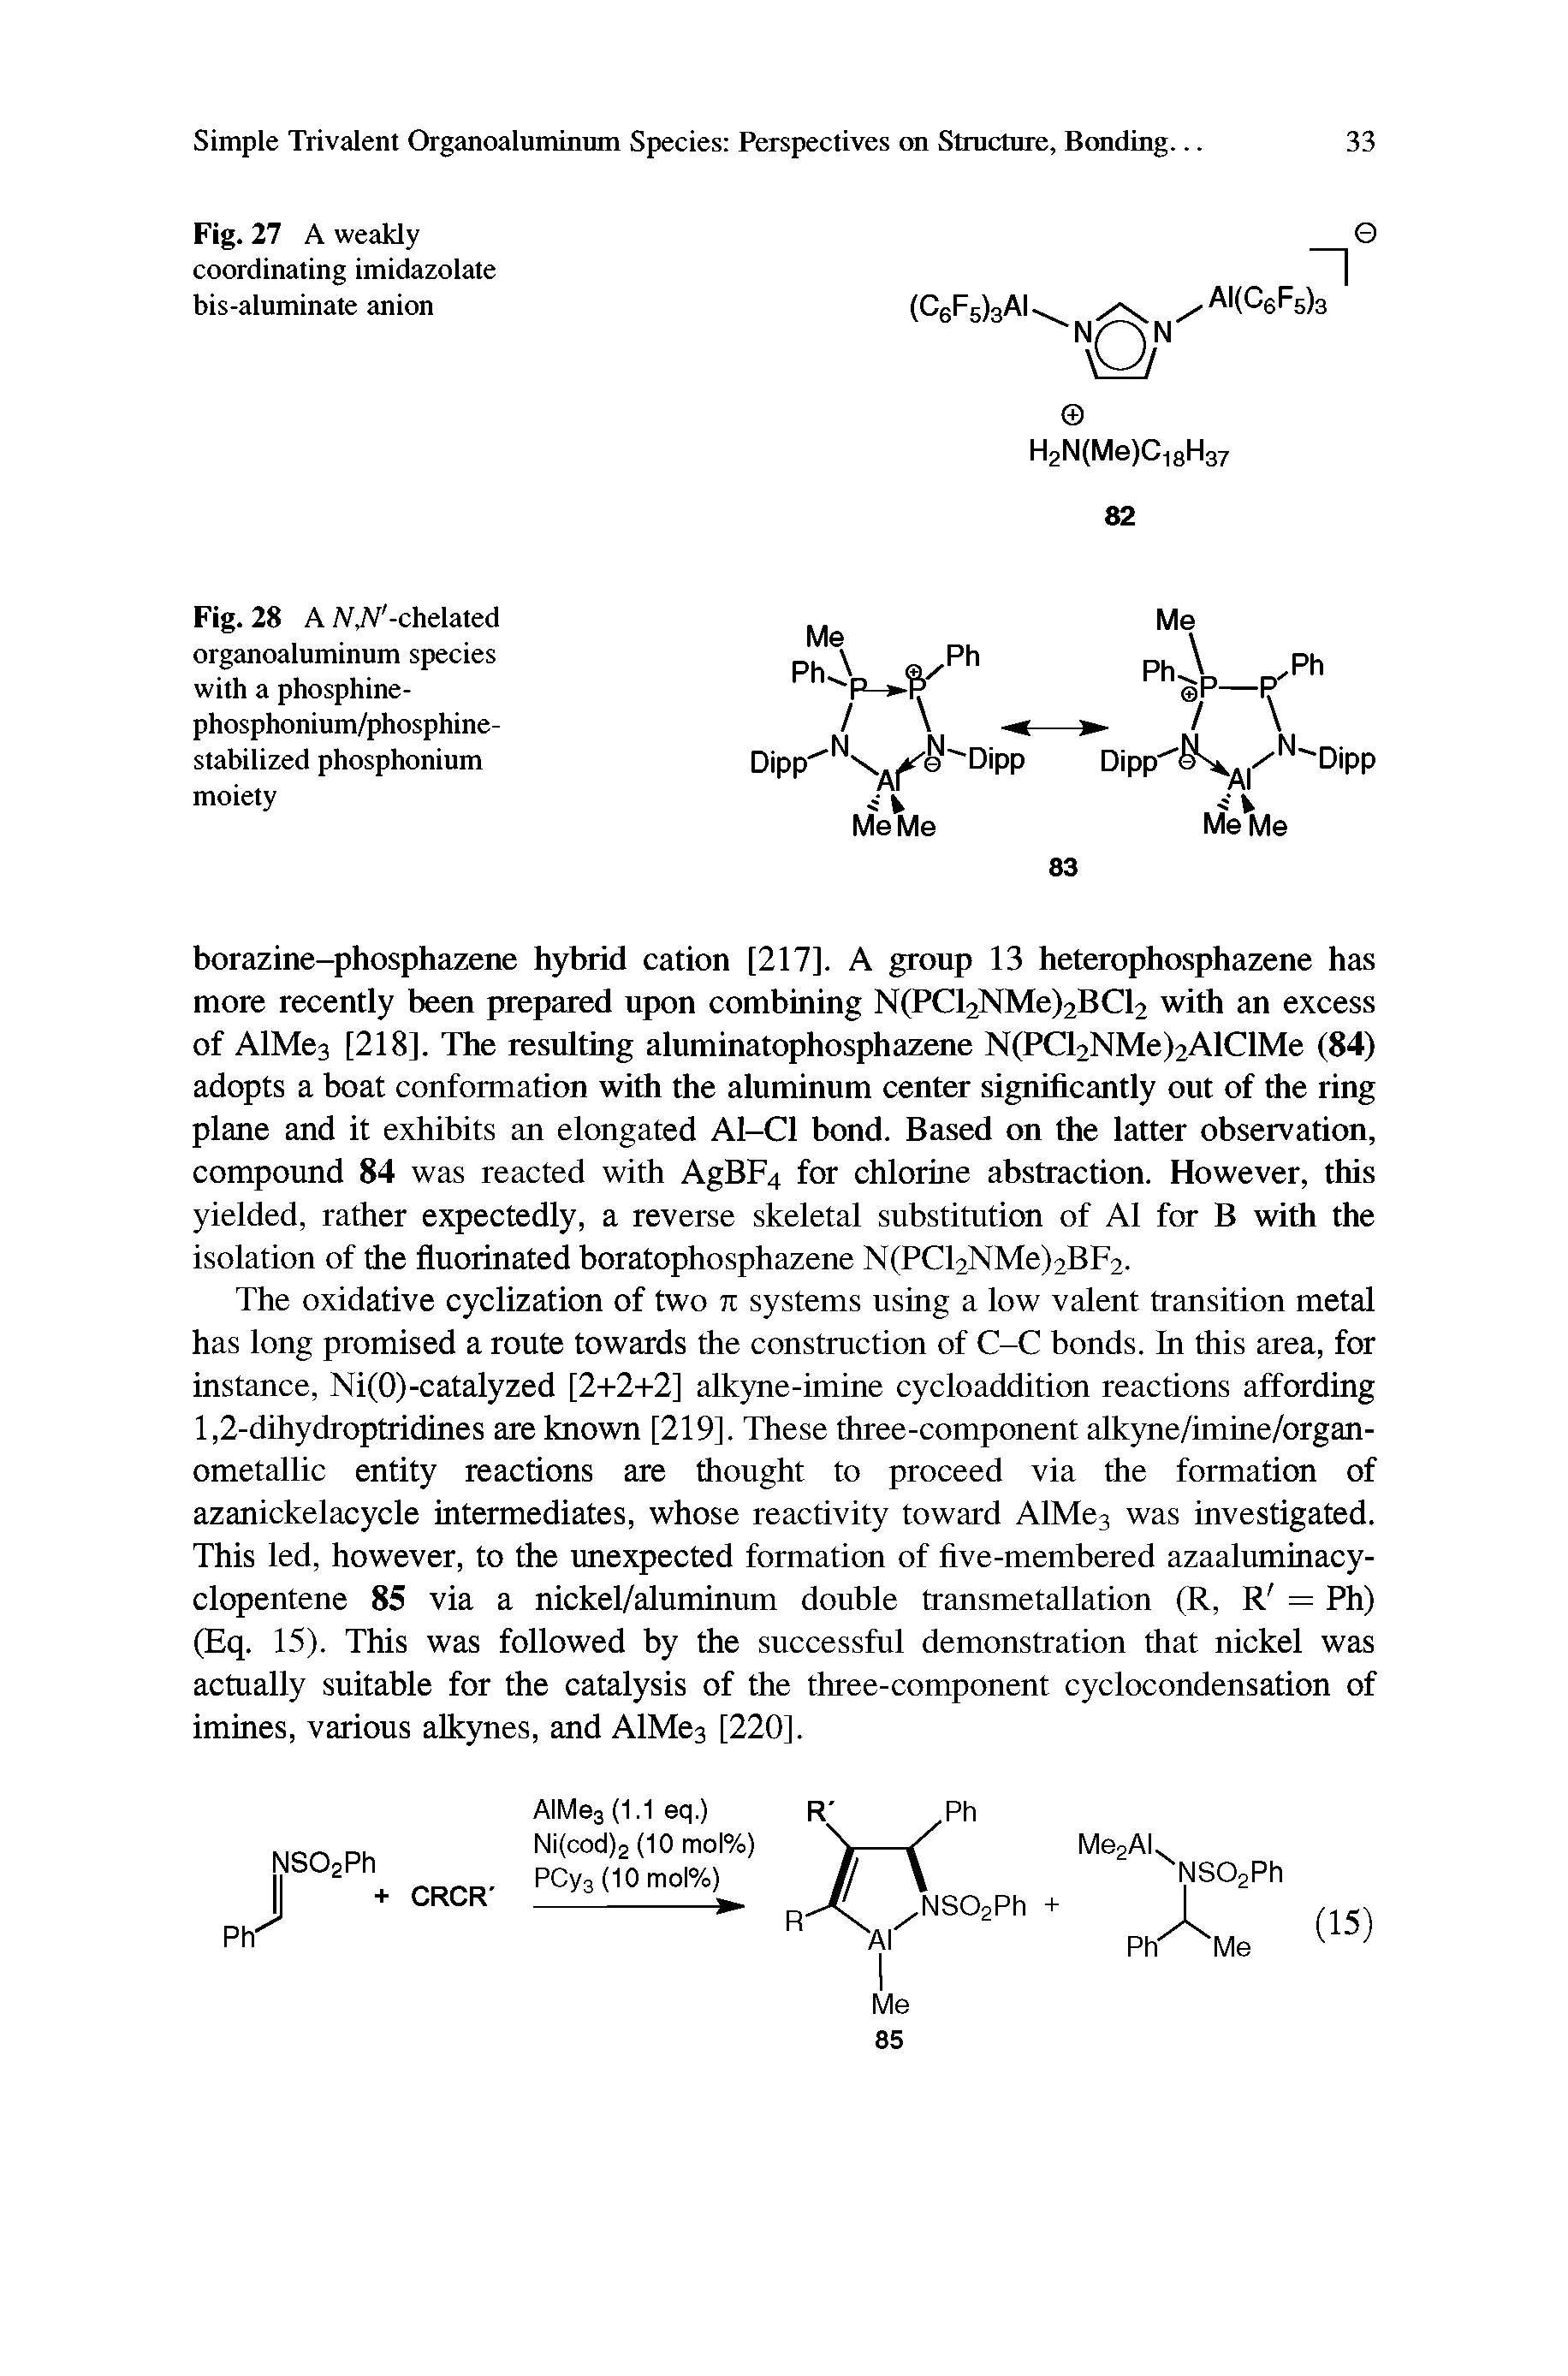 Fig. 28 A iV,iV -chelated organoaluminum species with a phosphine-phosphonium/phosphine-stabilized phosphonium moiety...